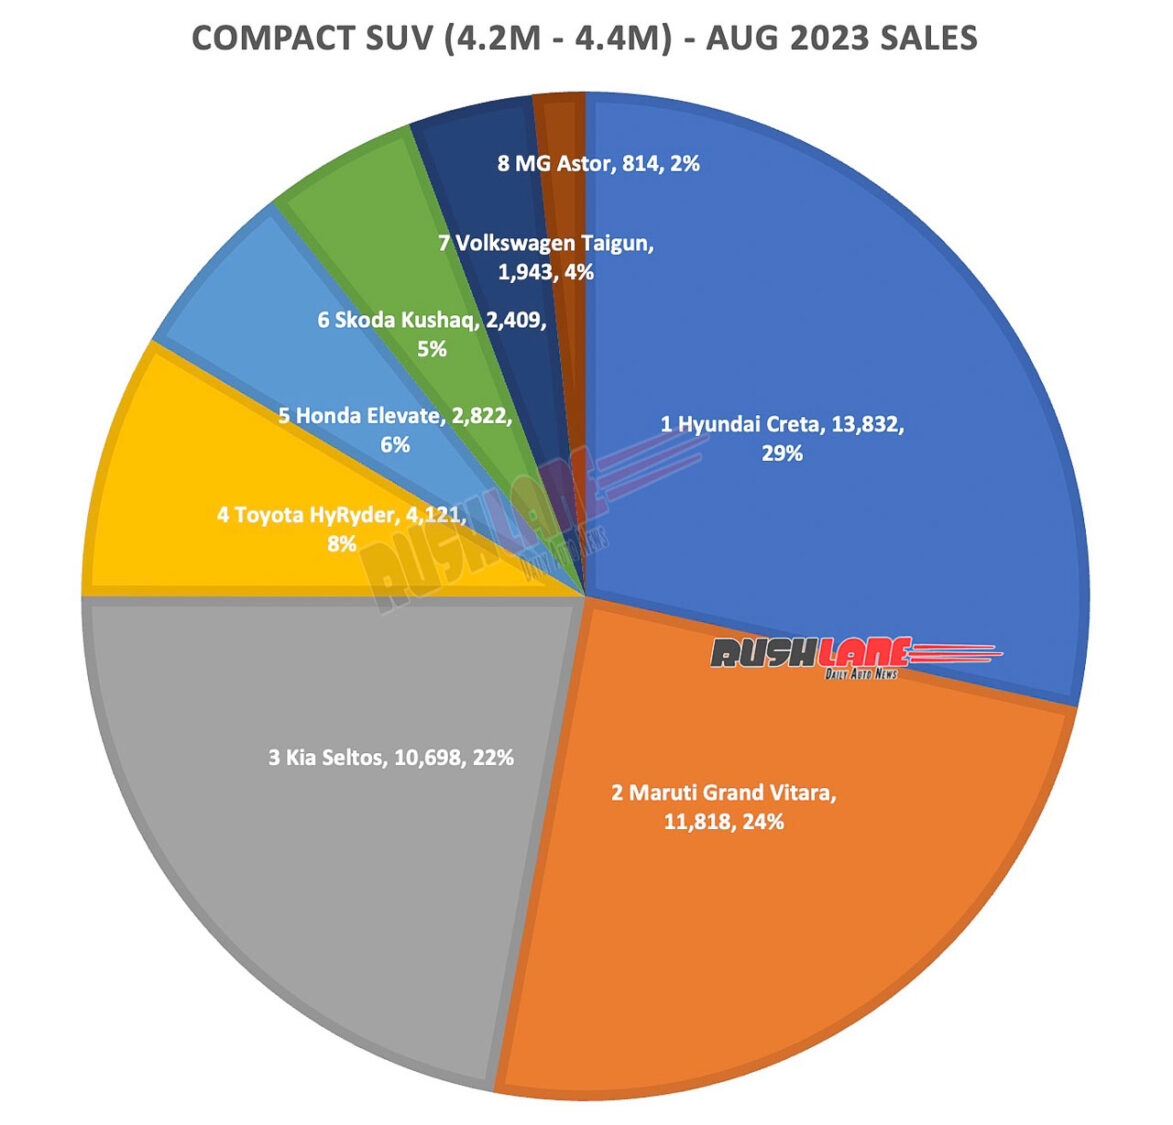 Compact SUV Sales Aug 2023